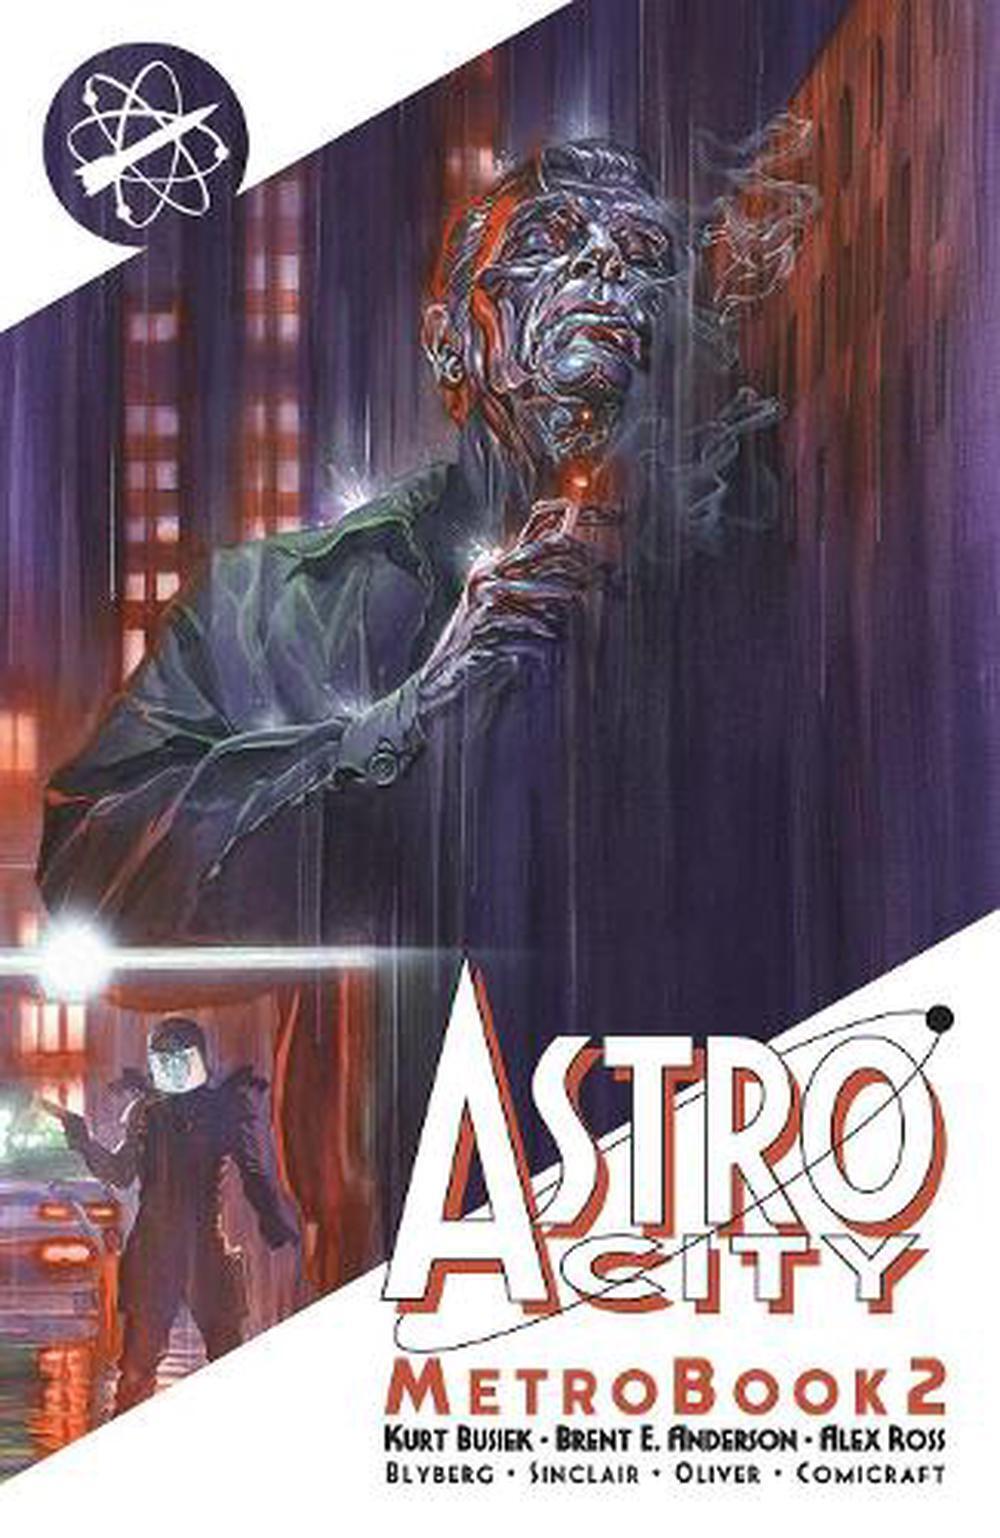 Astro City Metrobook, Volume 2 by Kurt Busiek (English) Paperback Book